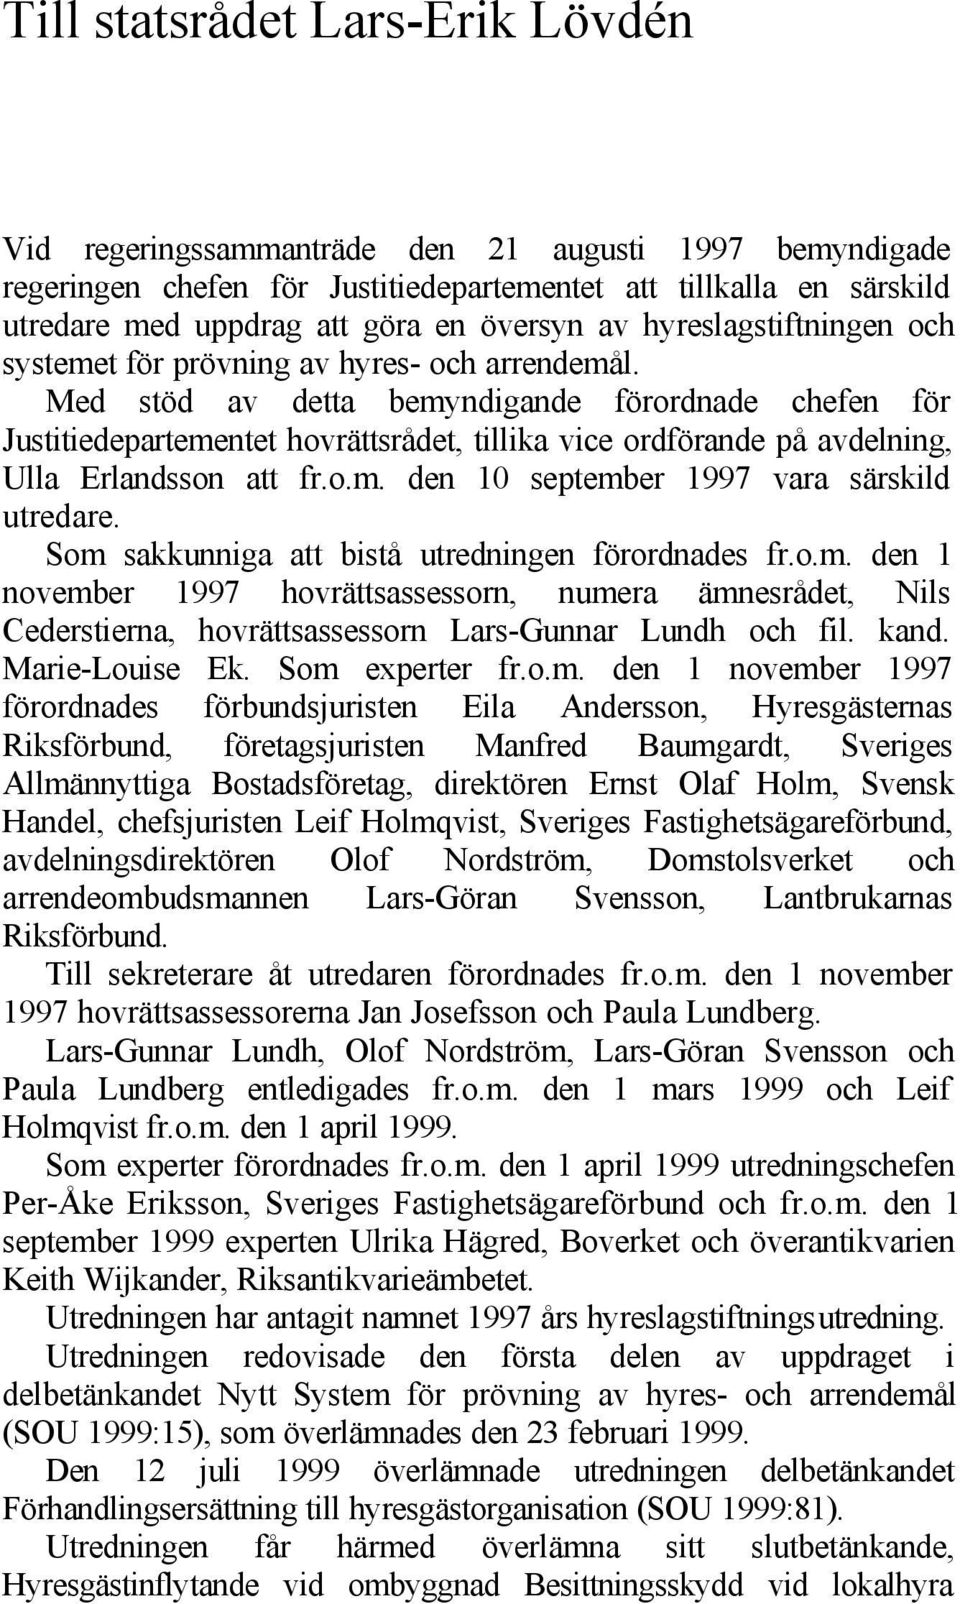 Till statsrådet Lars-Erik Lövdén - PDF Free Download